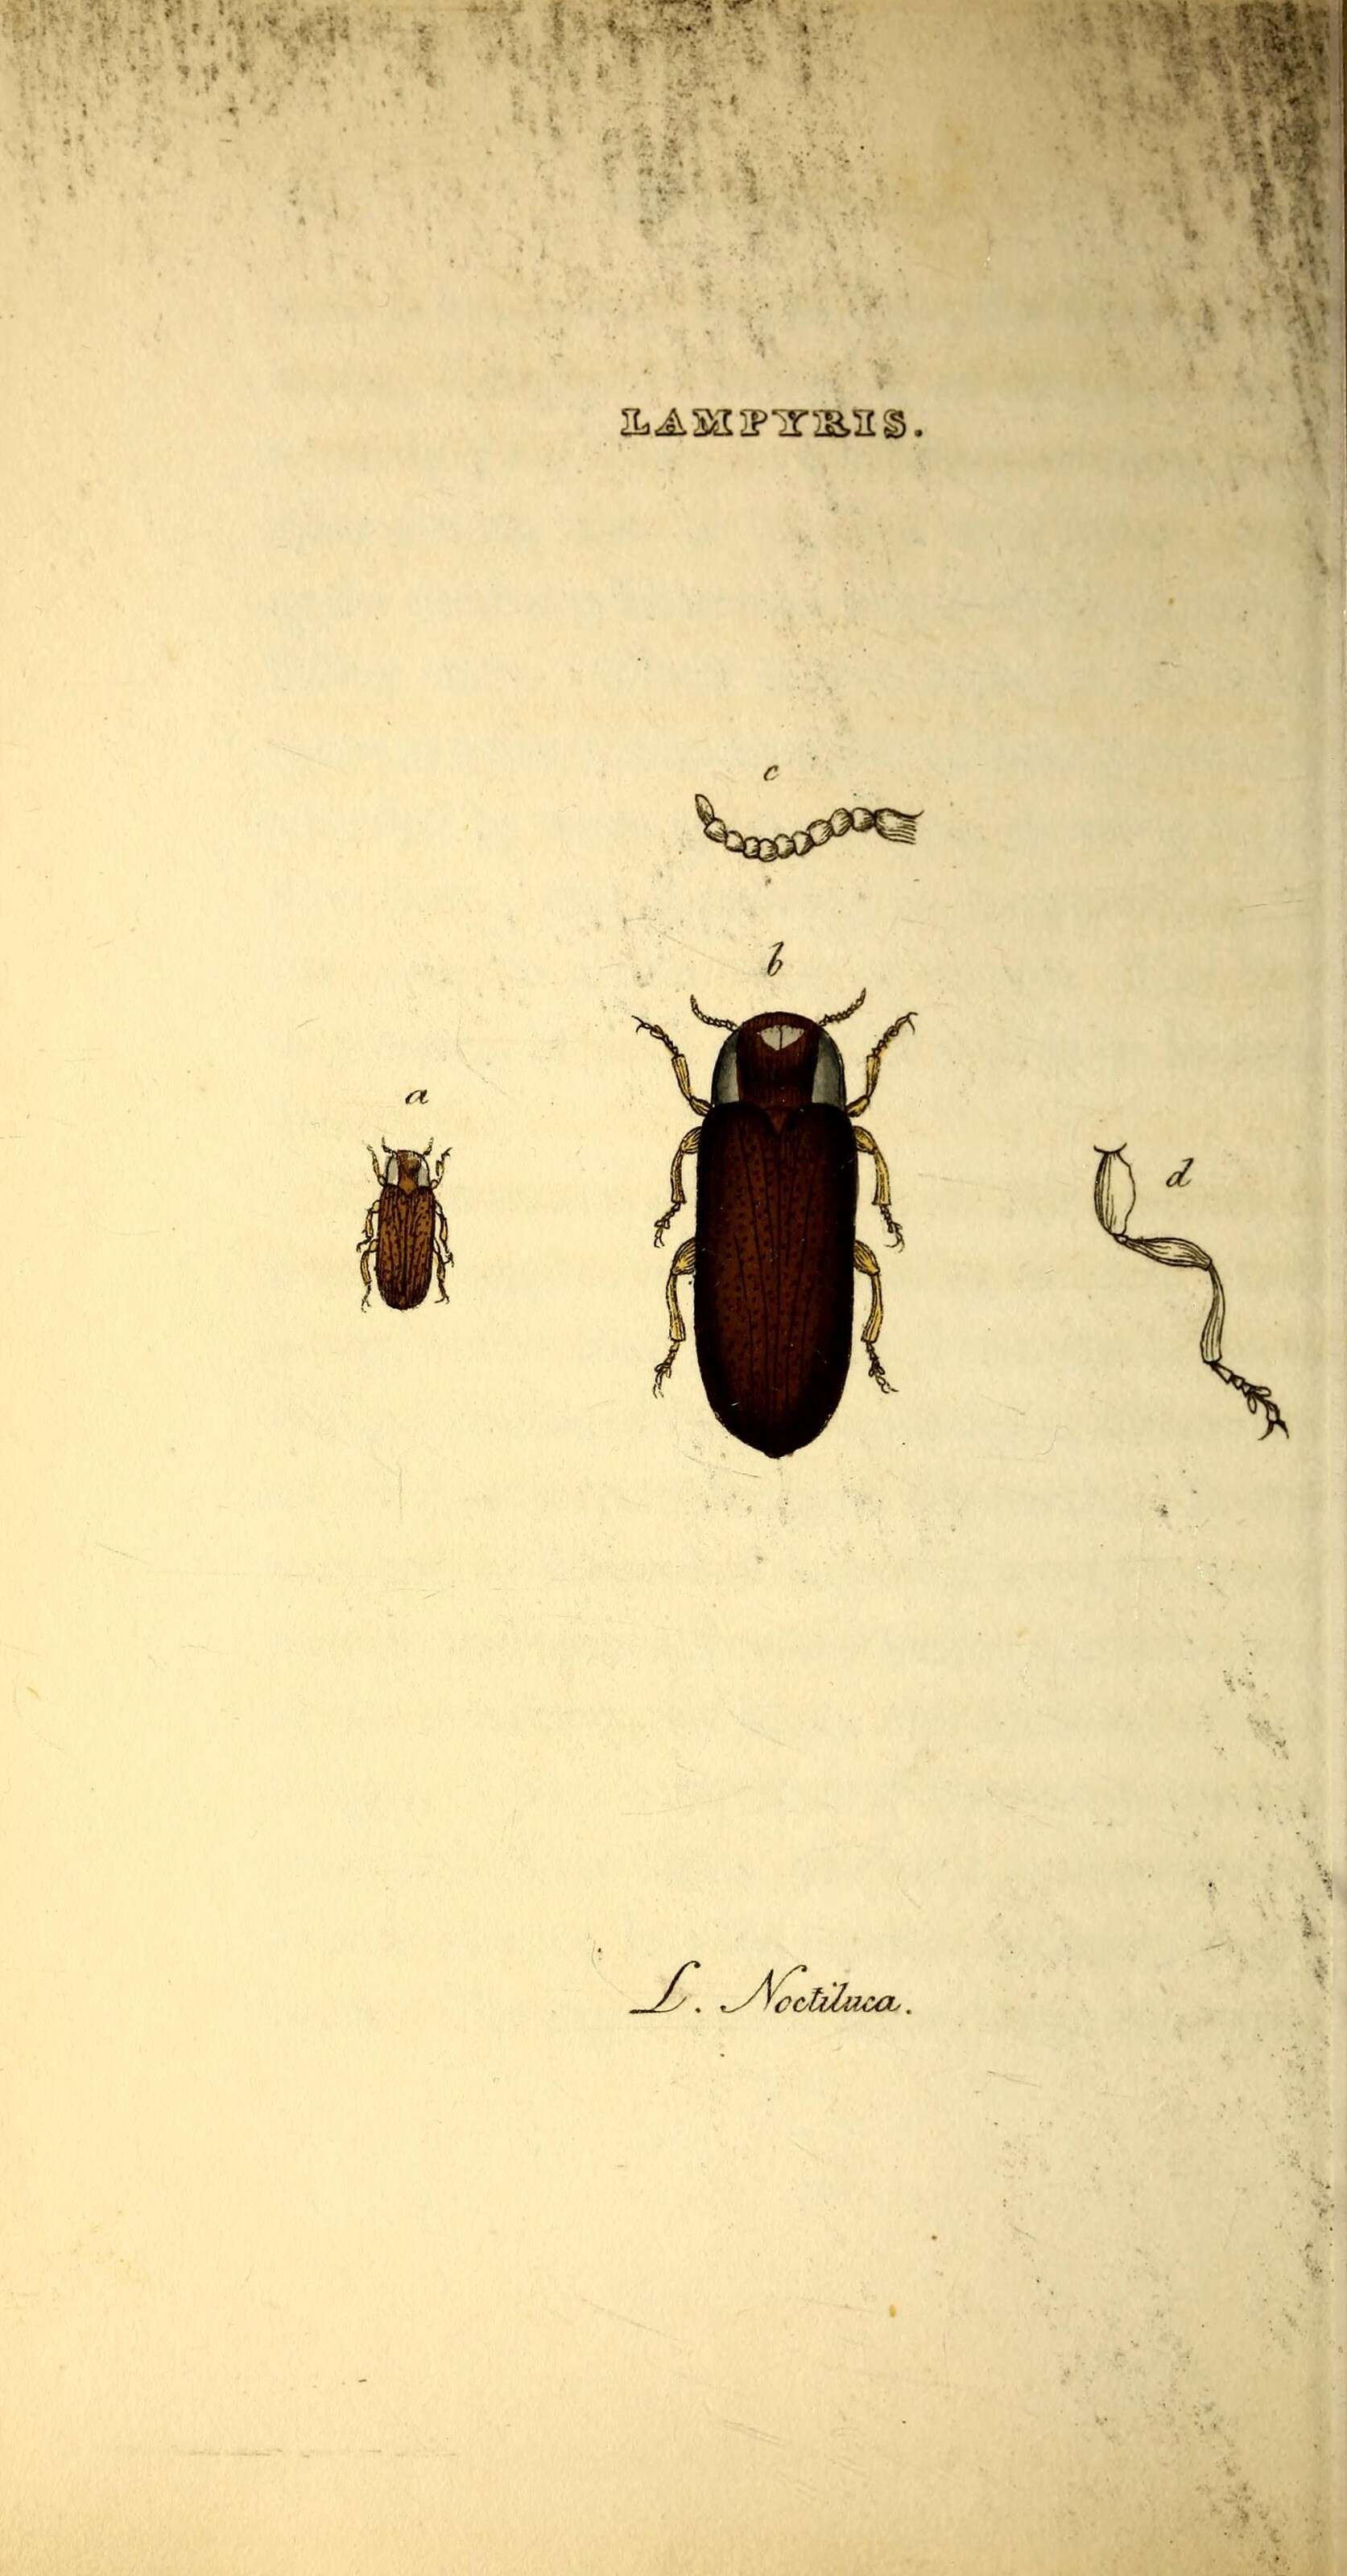 Imagem de Lampyris noctiluca (Linnaeus 1758)